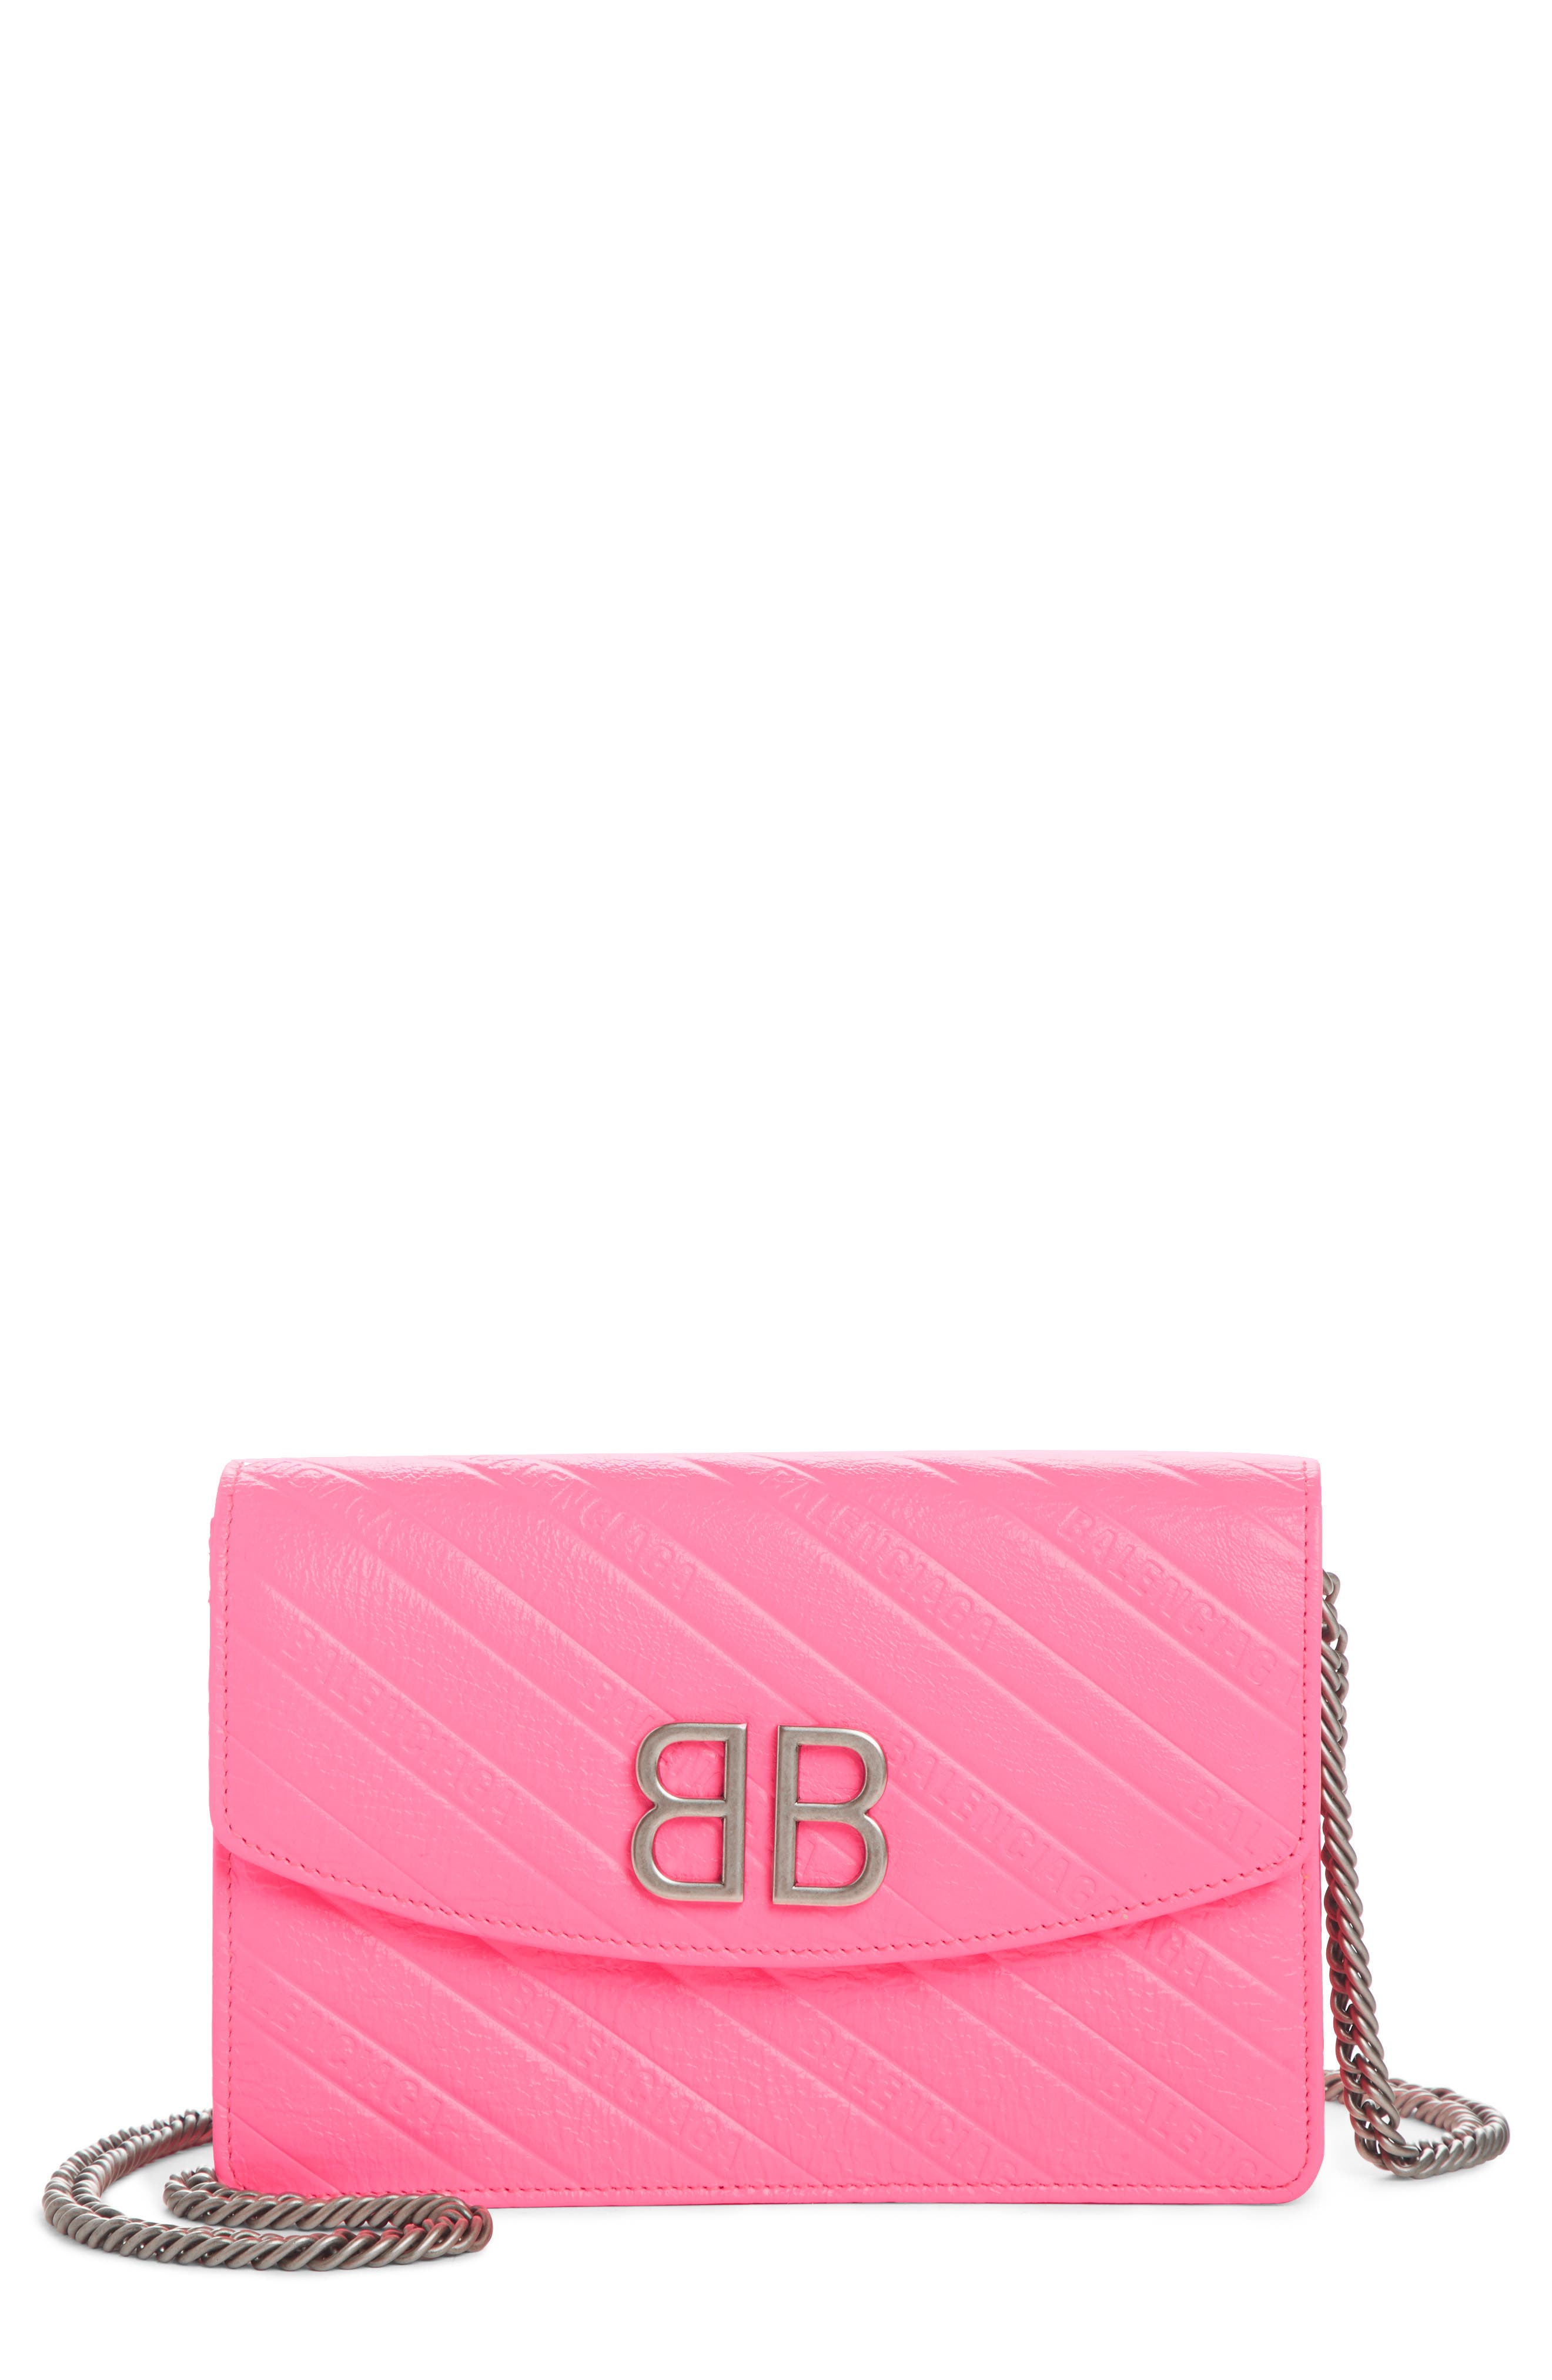 balenciaga wallet on chain pink